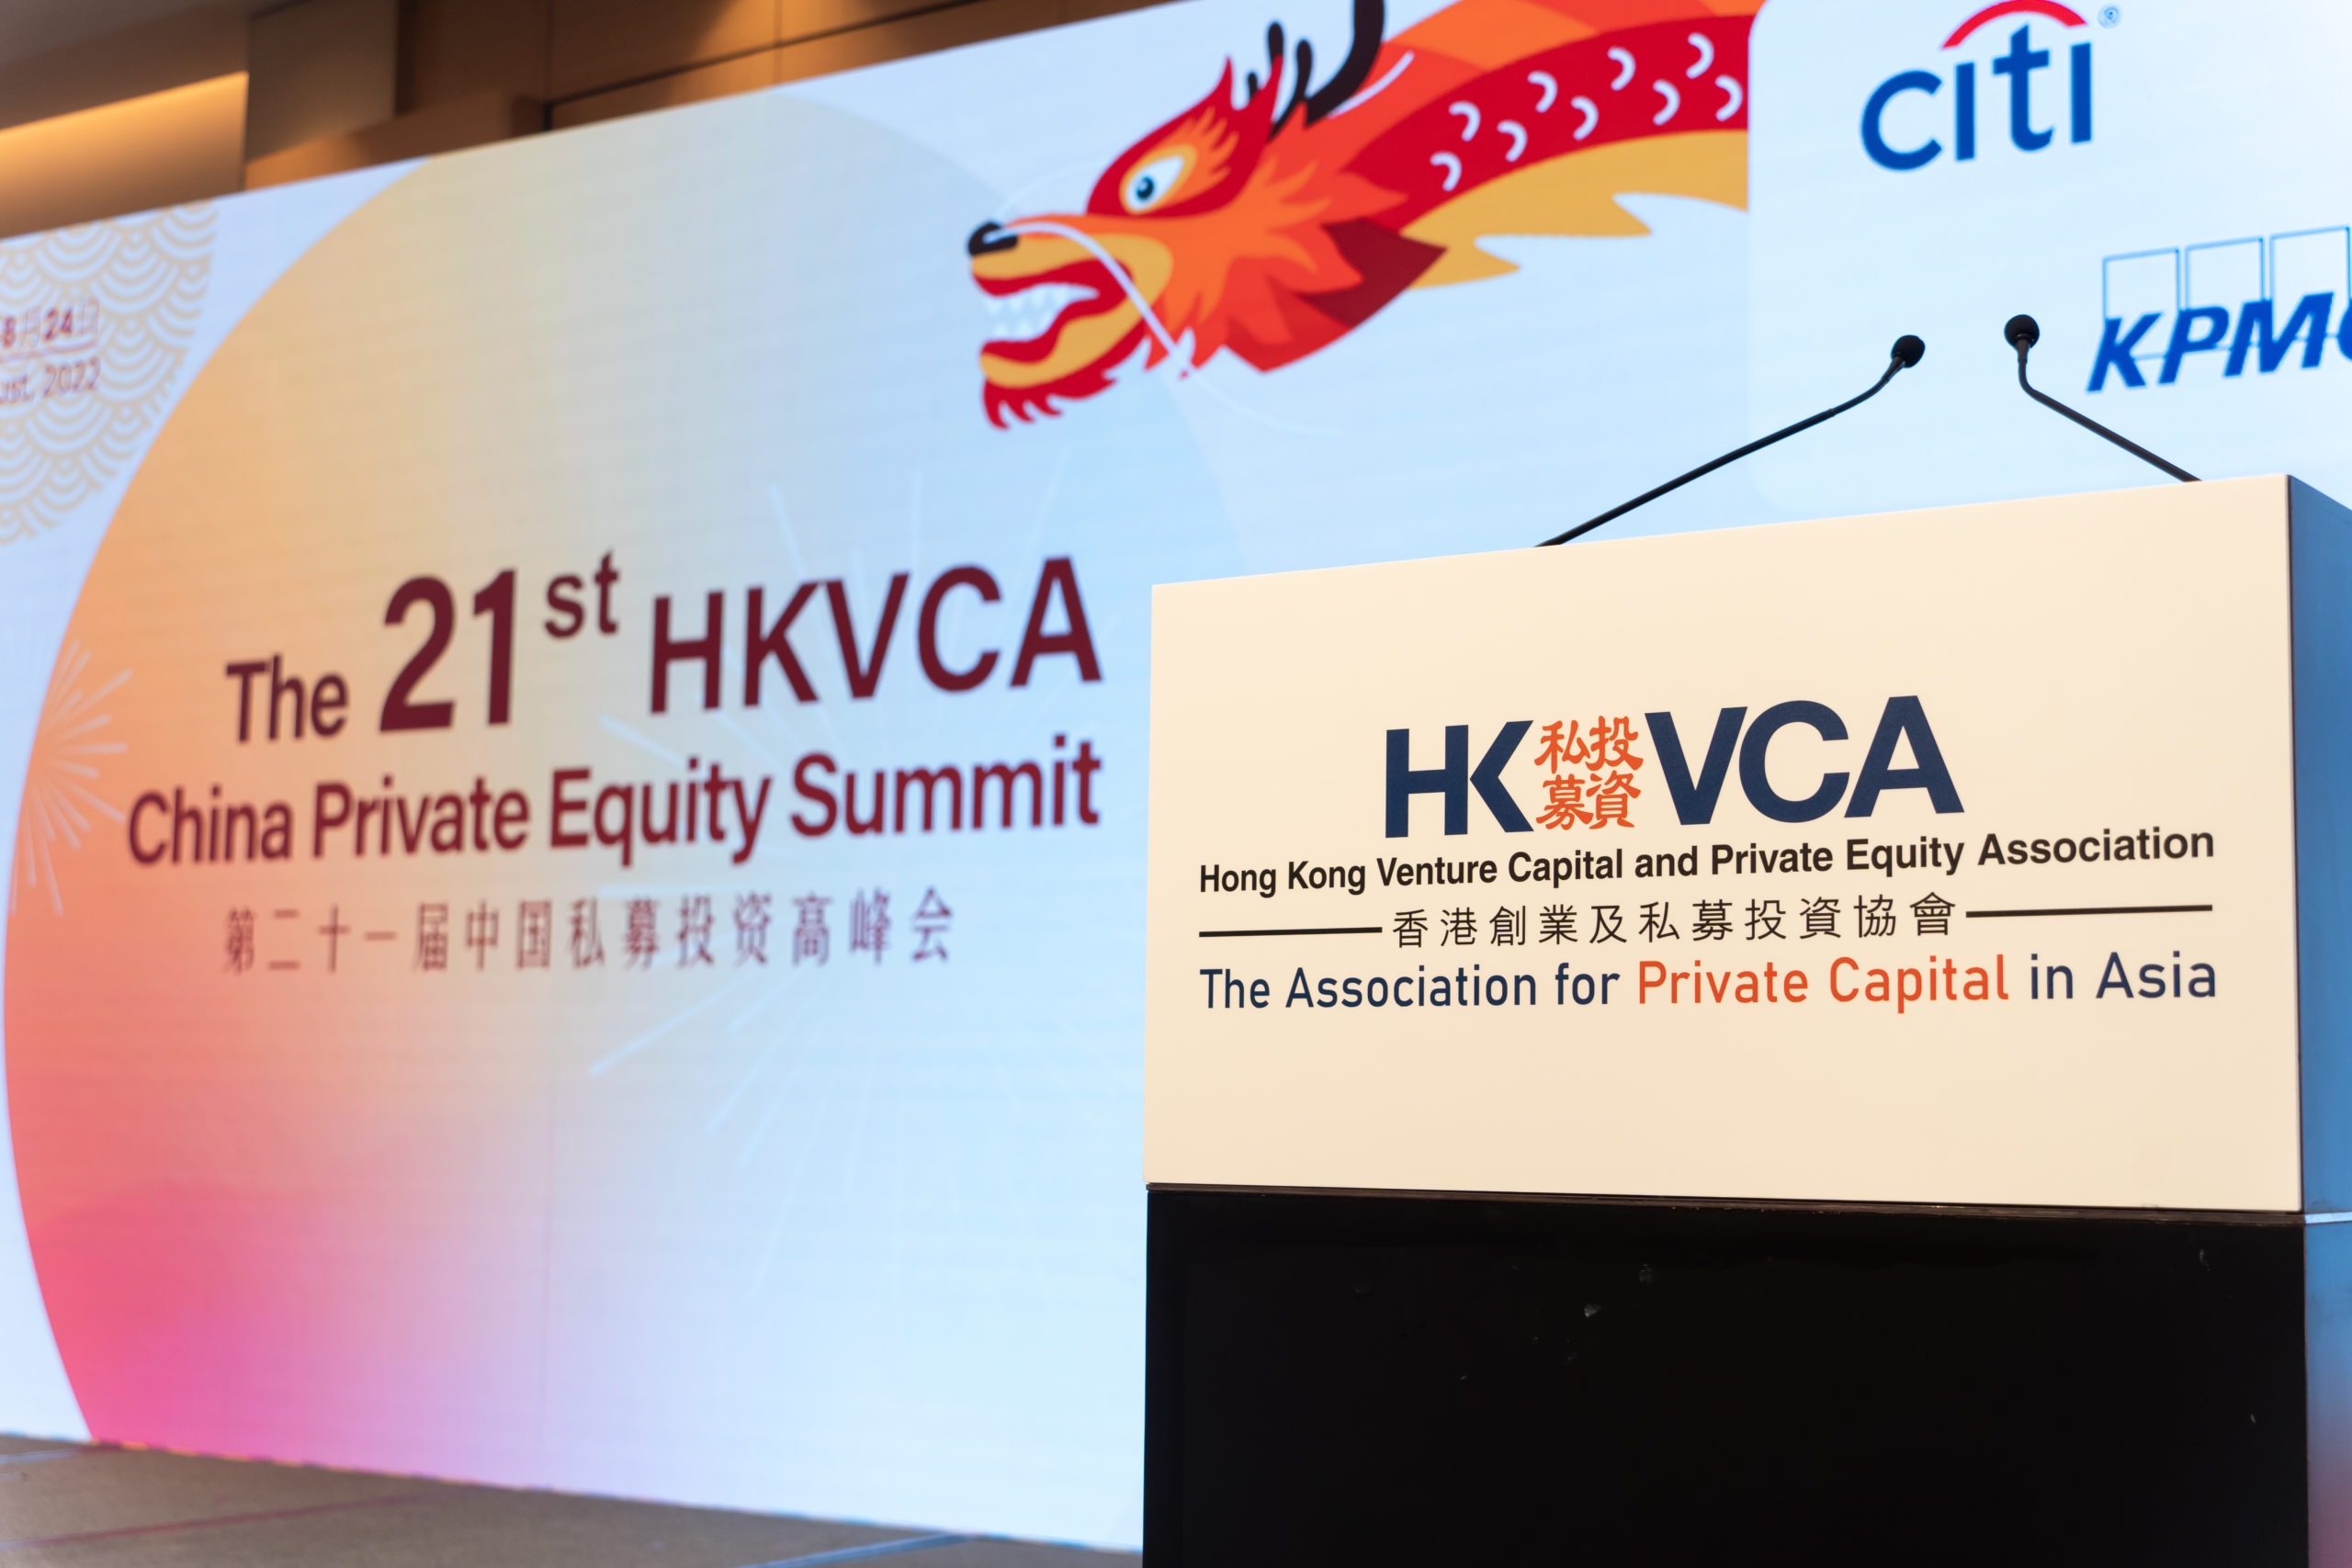 HKVCA 21st China Private Equity Summit 2022 | 香港创业及私募投资协会第21届中国私募投资高峰会2022